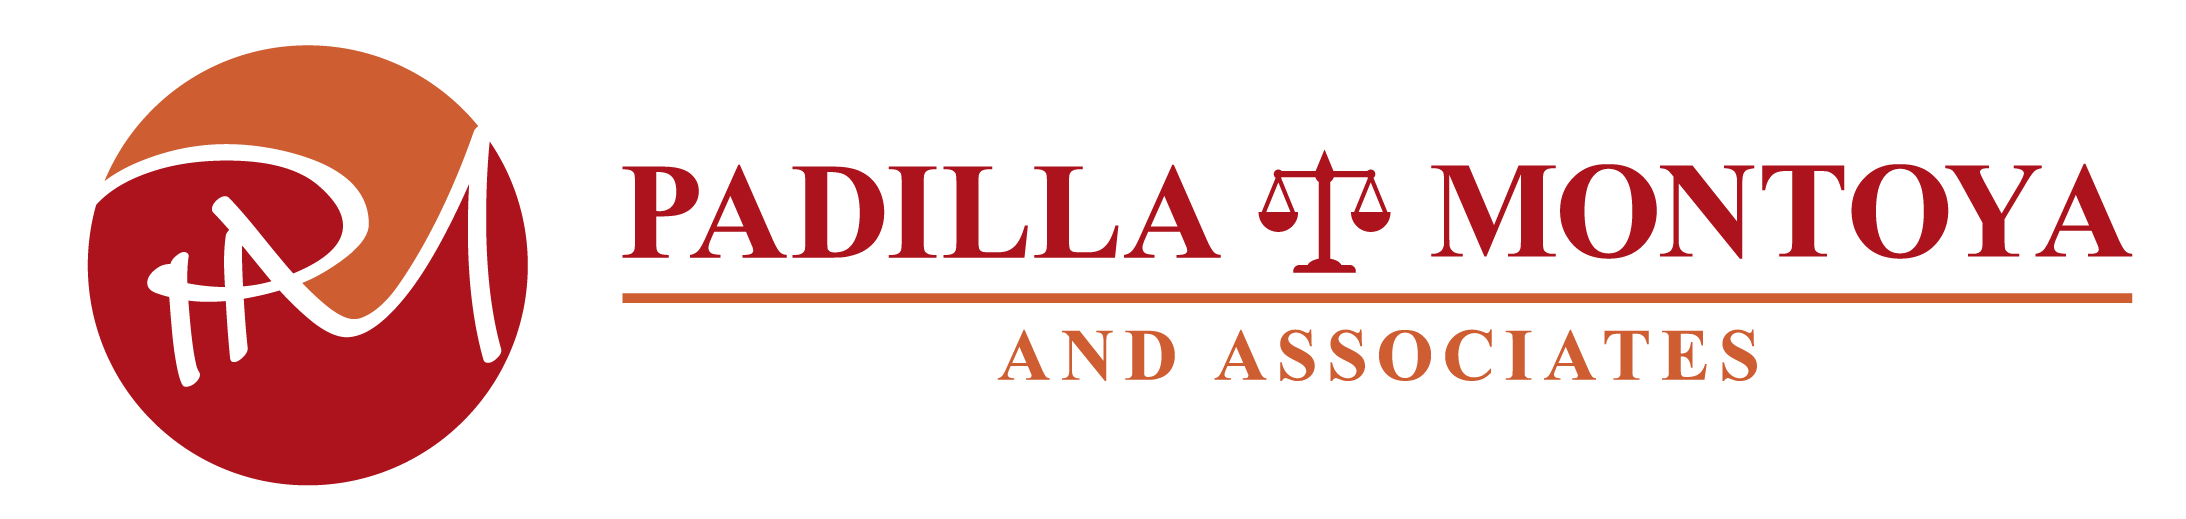 Padilla Montoya and Associates